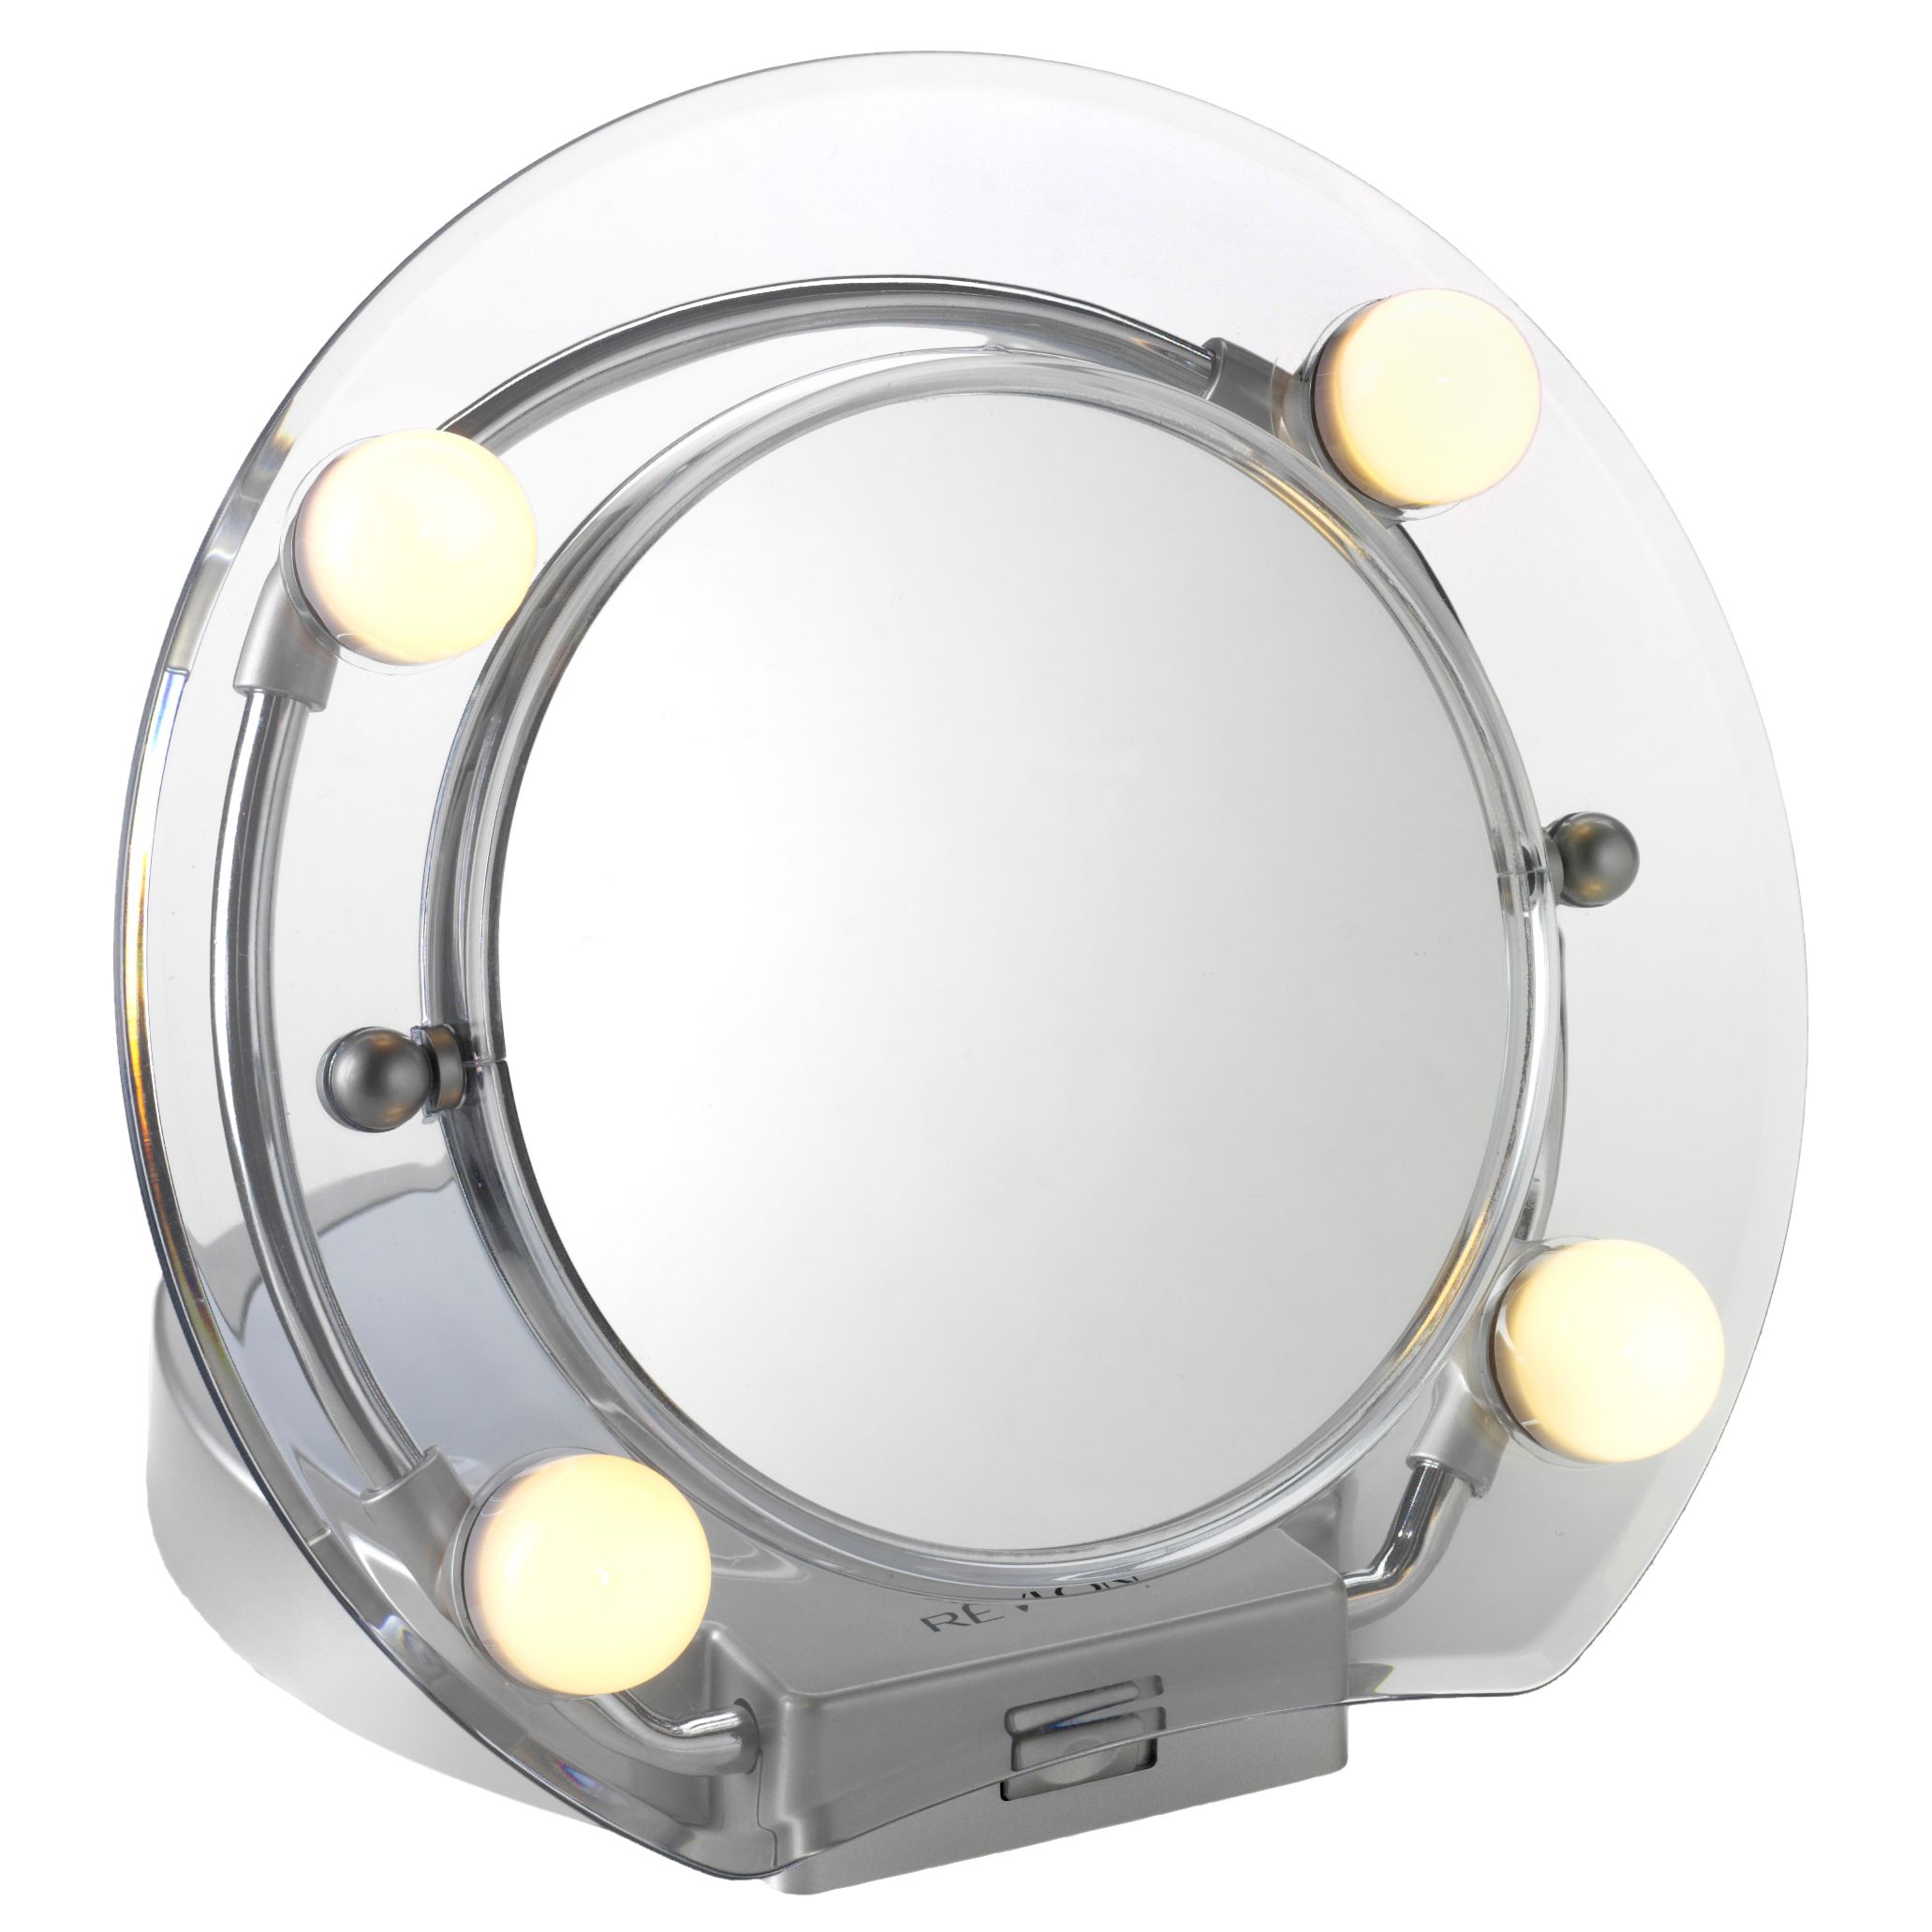 Revlon 9415NU Illuminated Make-up Mirror